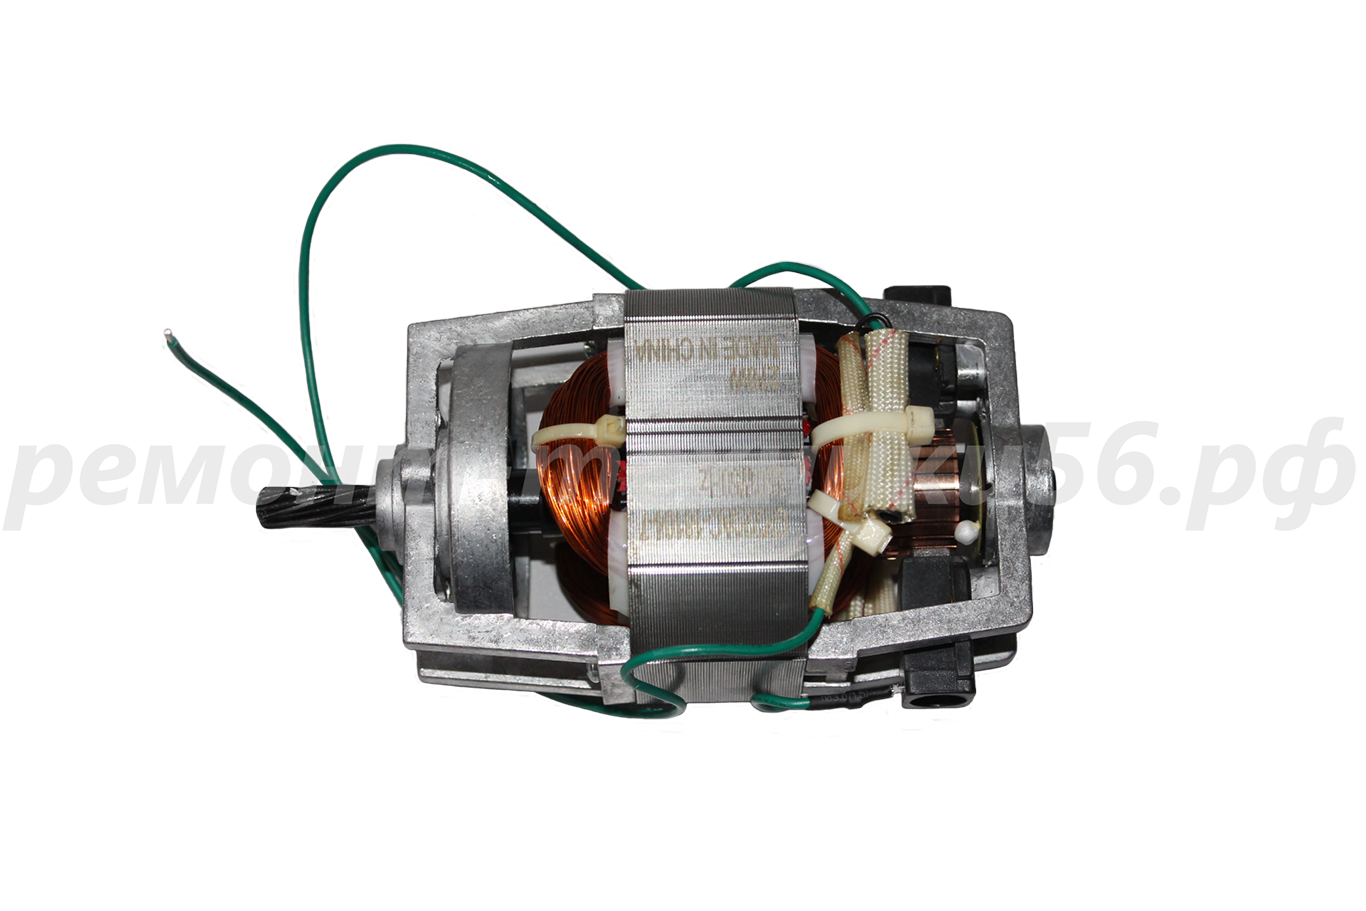 Электродвигатель PU 7630220-8101 для мясорубки M25 Аксион выбор из каталога запчастей фото1